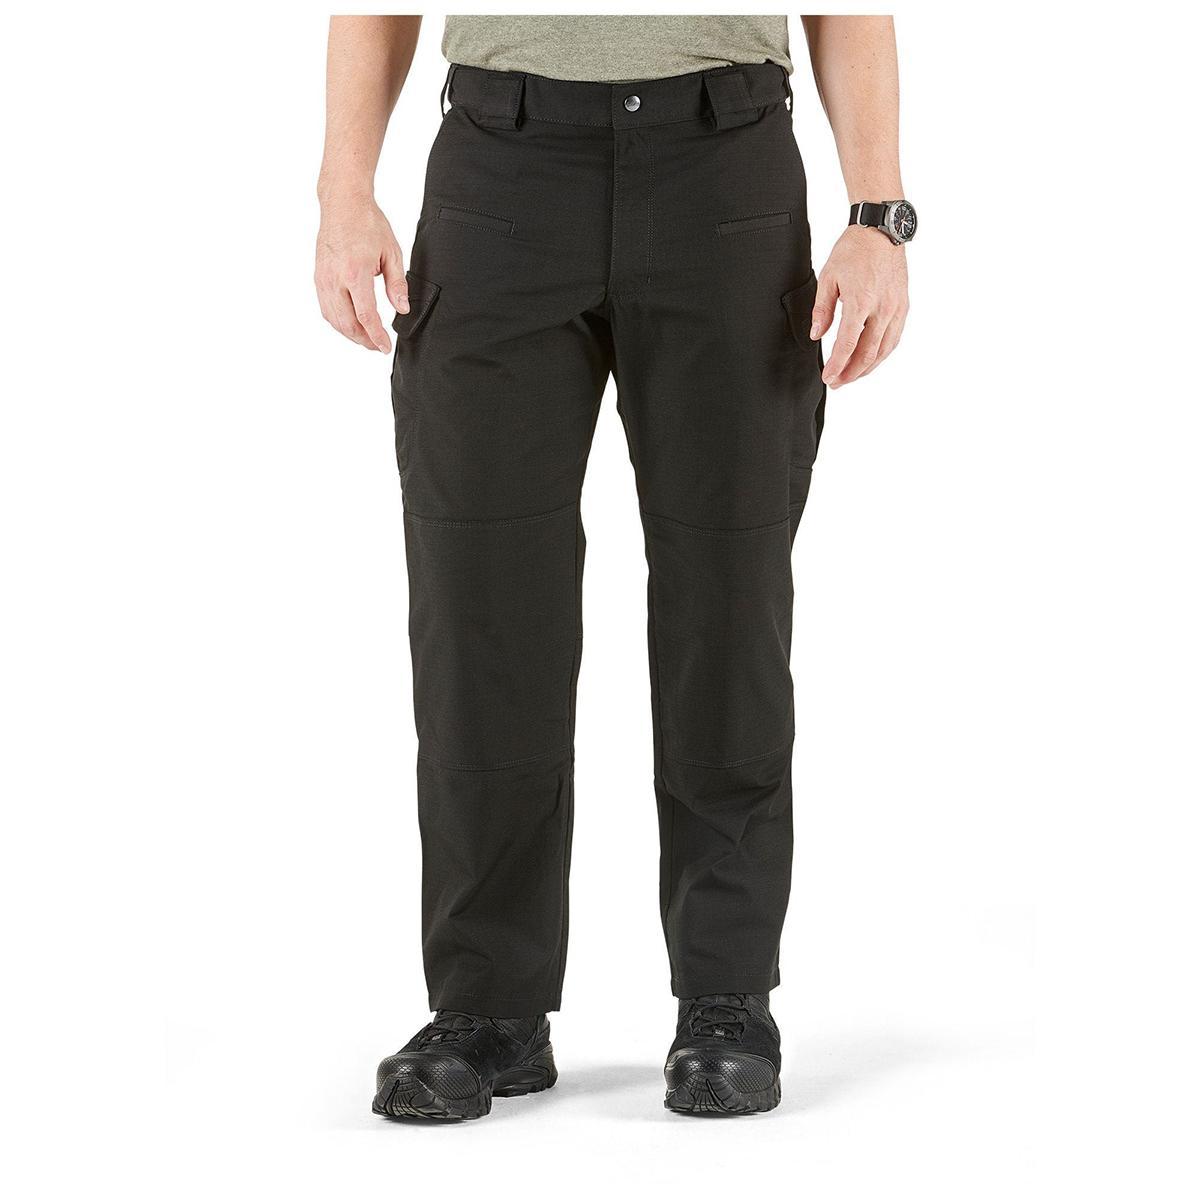  5.11 Tactical Men's Ridge Pant, Flex-Tac Stretch Fabric,  Comfort Waist, Style 74520, Kangaroo, 28W x 34L: Clothing, Shoes & Jewelry